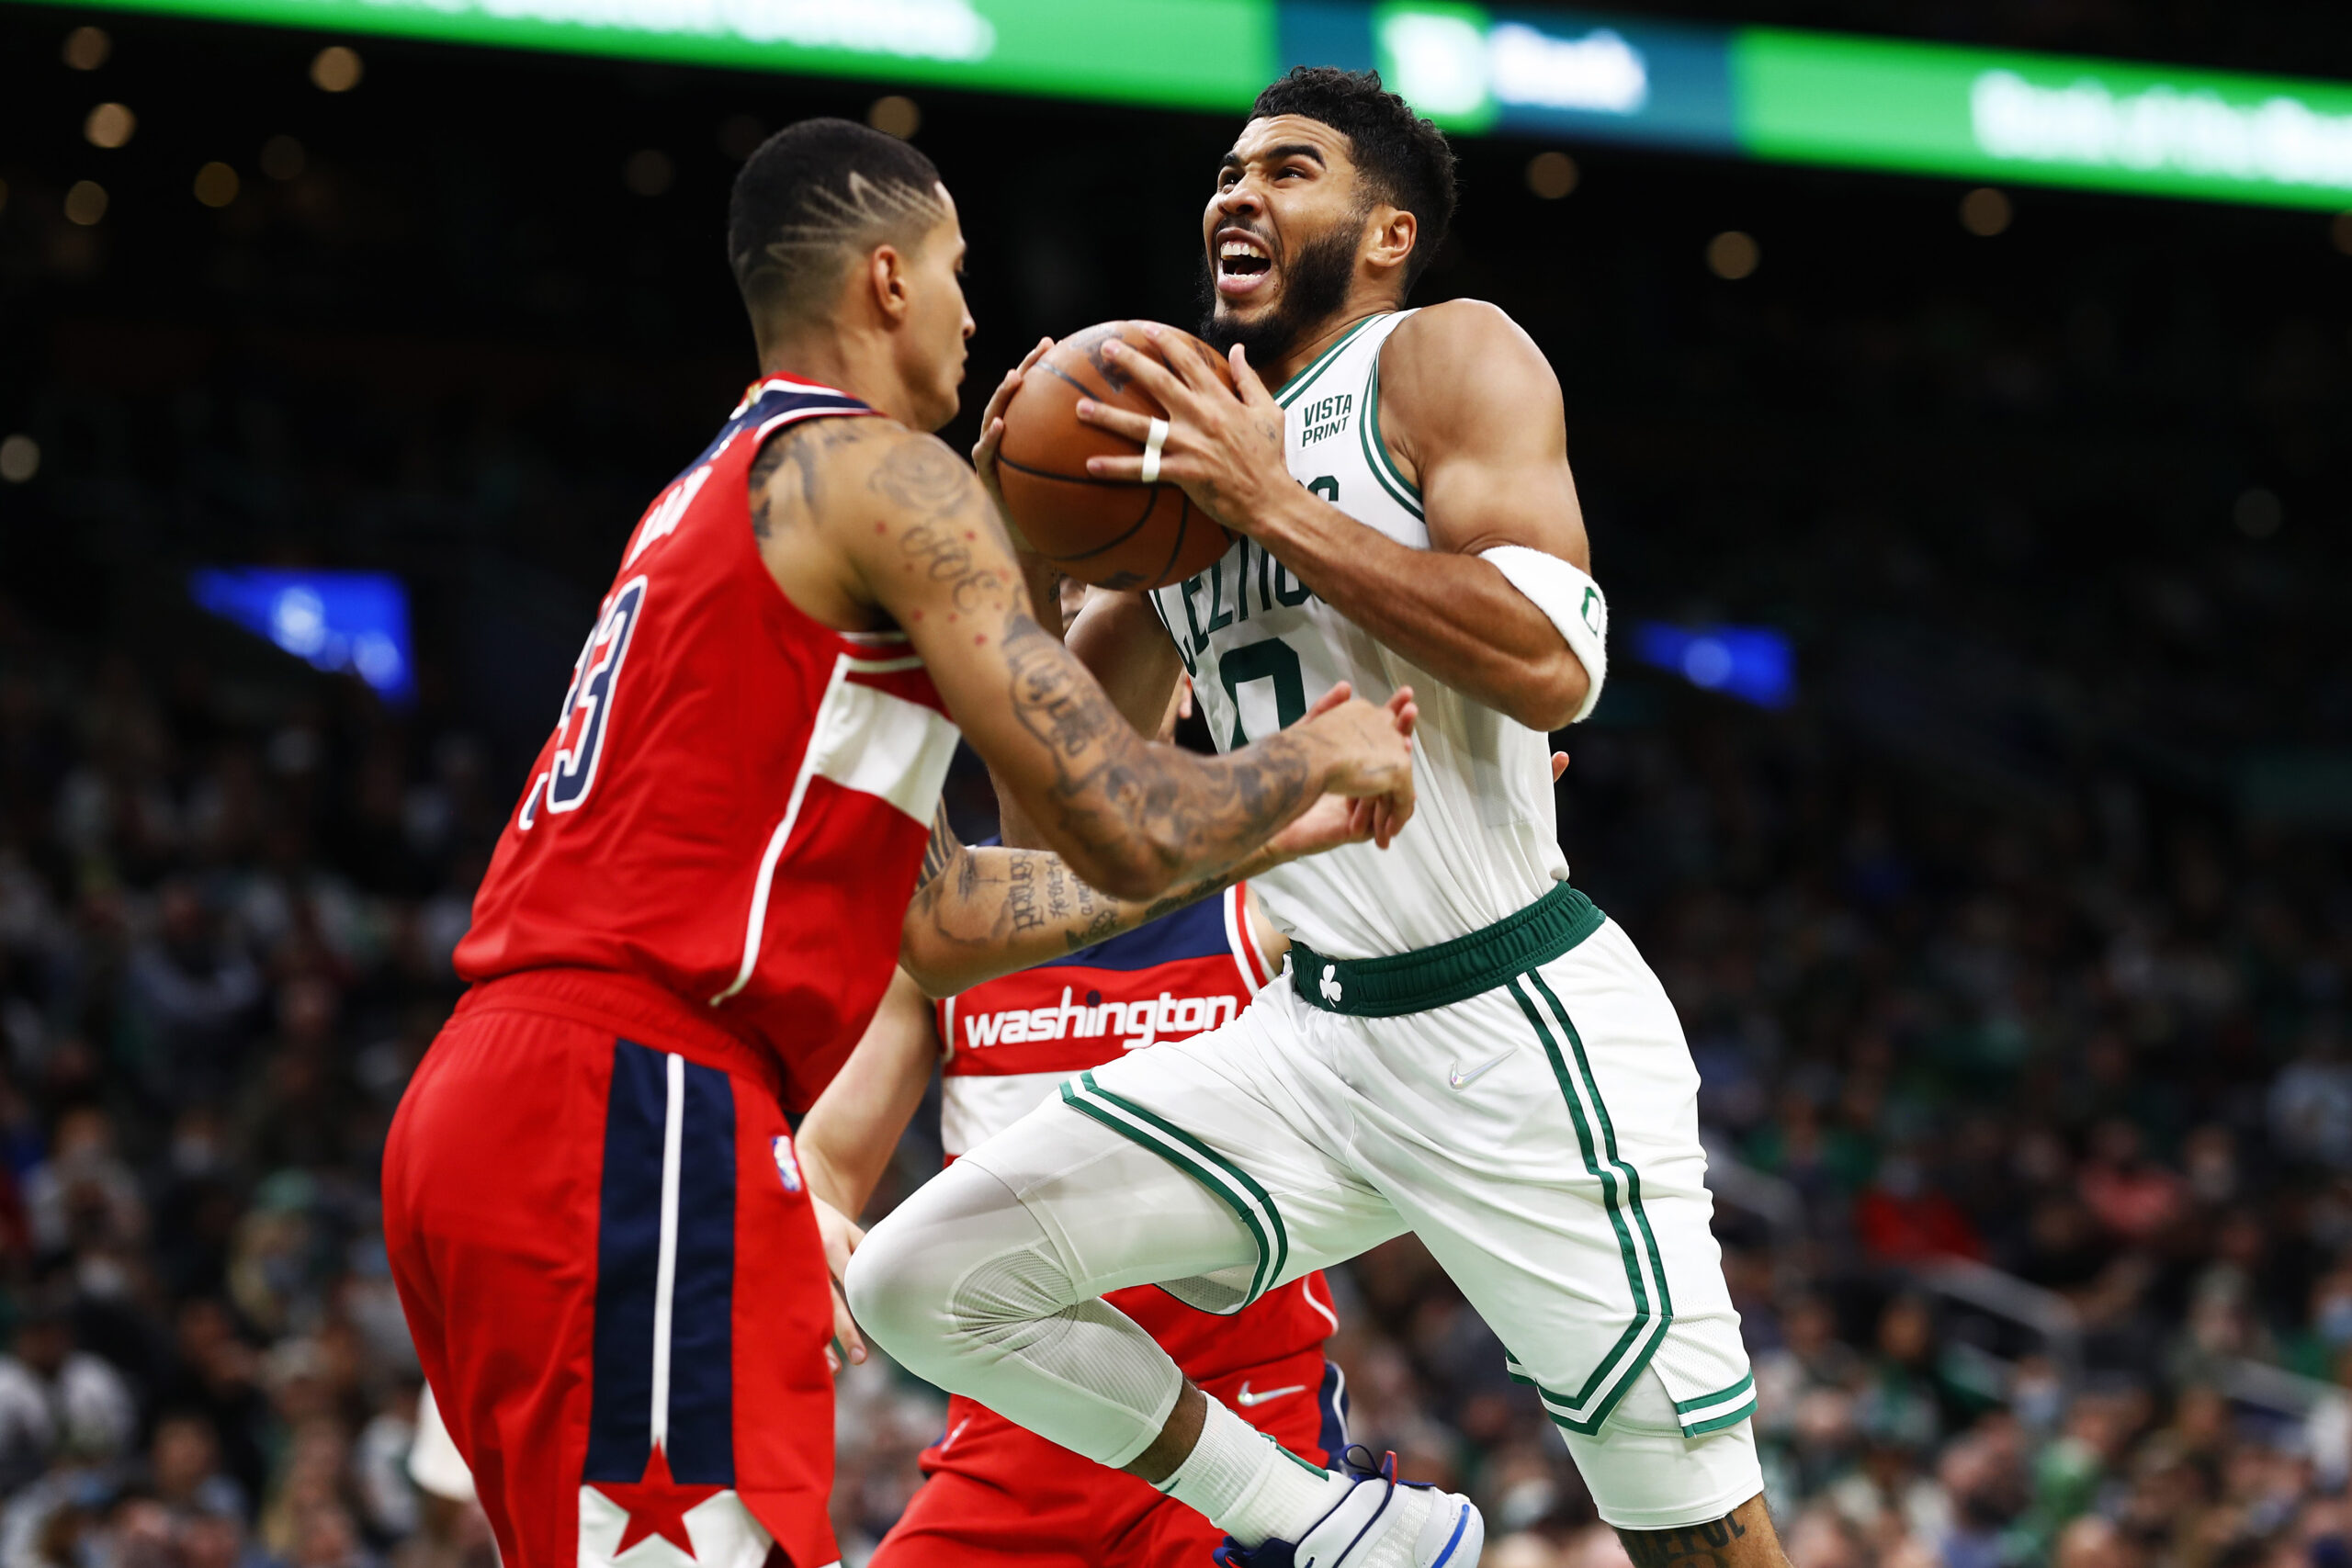 Boston Celtics: Jayson Tatum's status likely to have little impact on Game 3